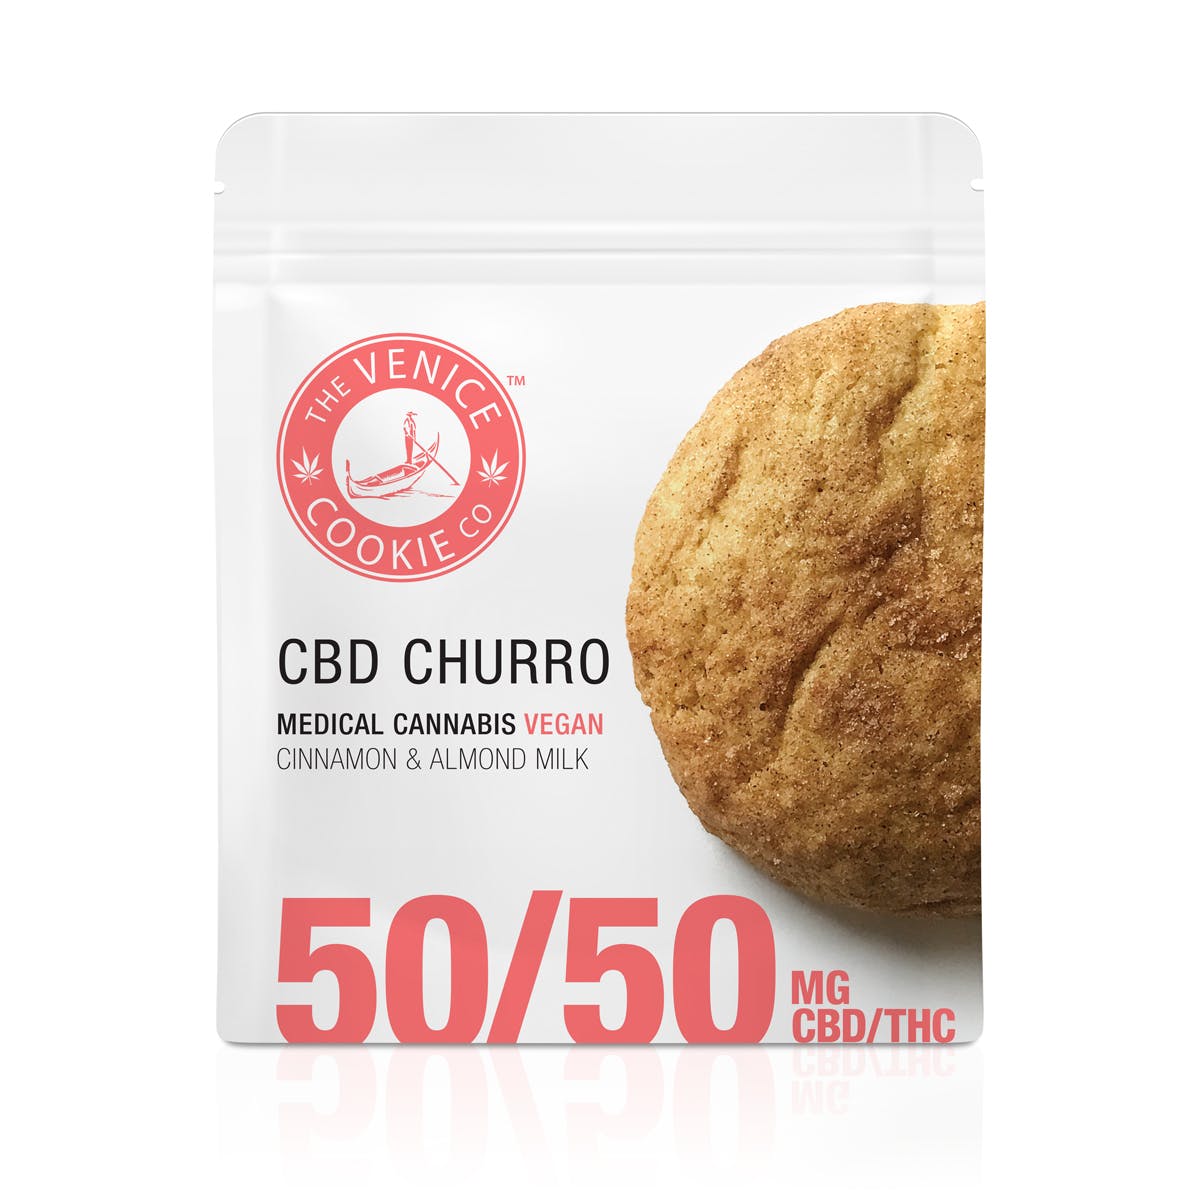 marijuana-dispensaries-desert-organic-solutions-palm-springs-92258-in-palm-springs-cbd-churro-cookie-5050